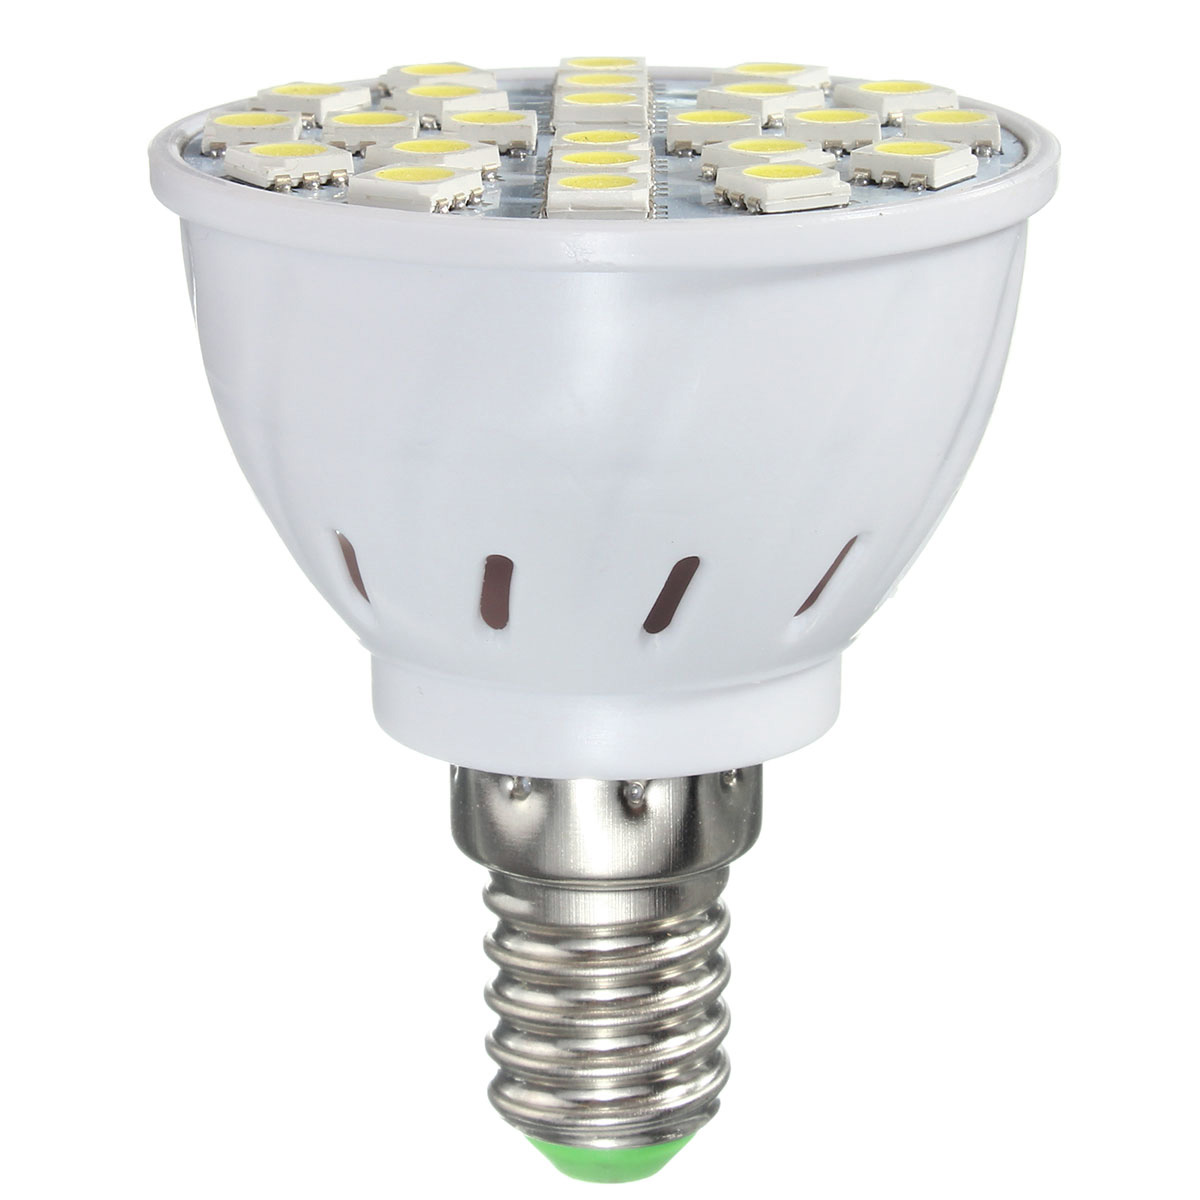 E27-E14-GU10-MR16-35W-24-SMD-5050-LED-Pure-White-Warm-White-Spotlightt-Bulb-AC110V-AC220V-1088759